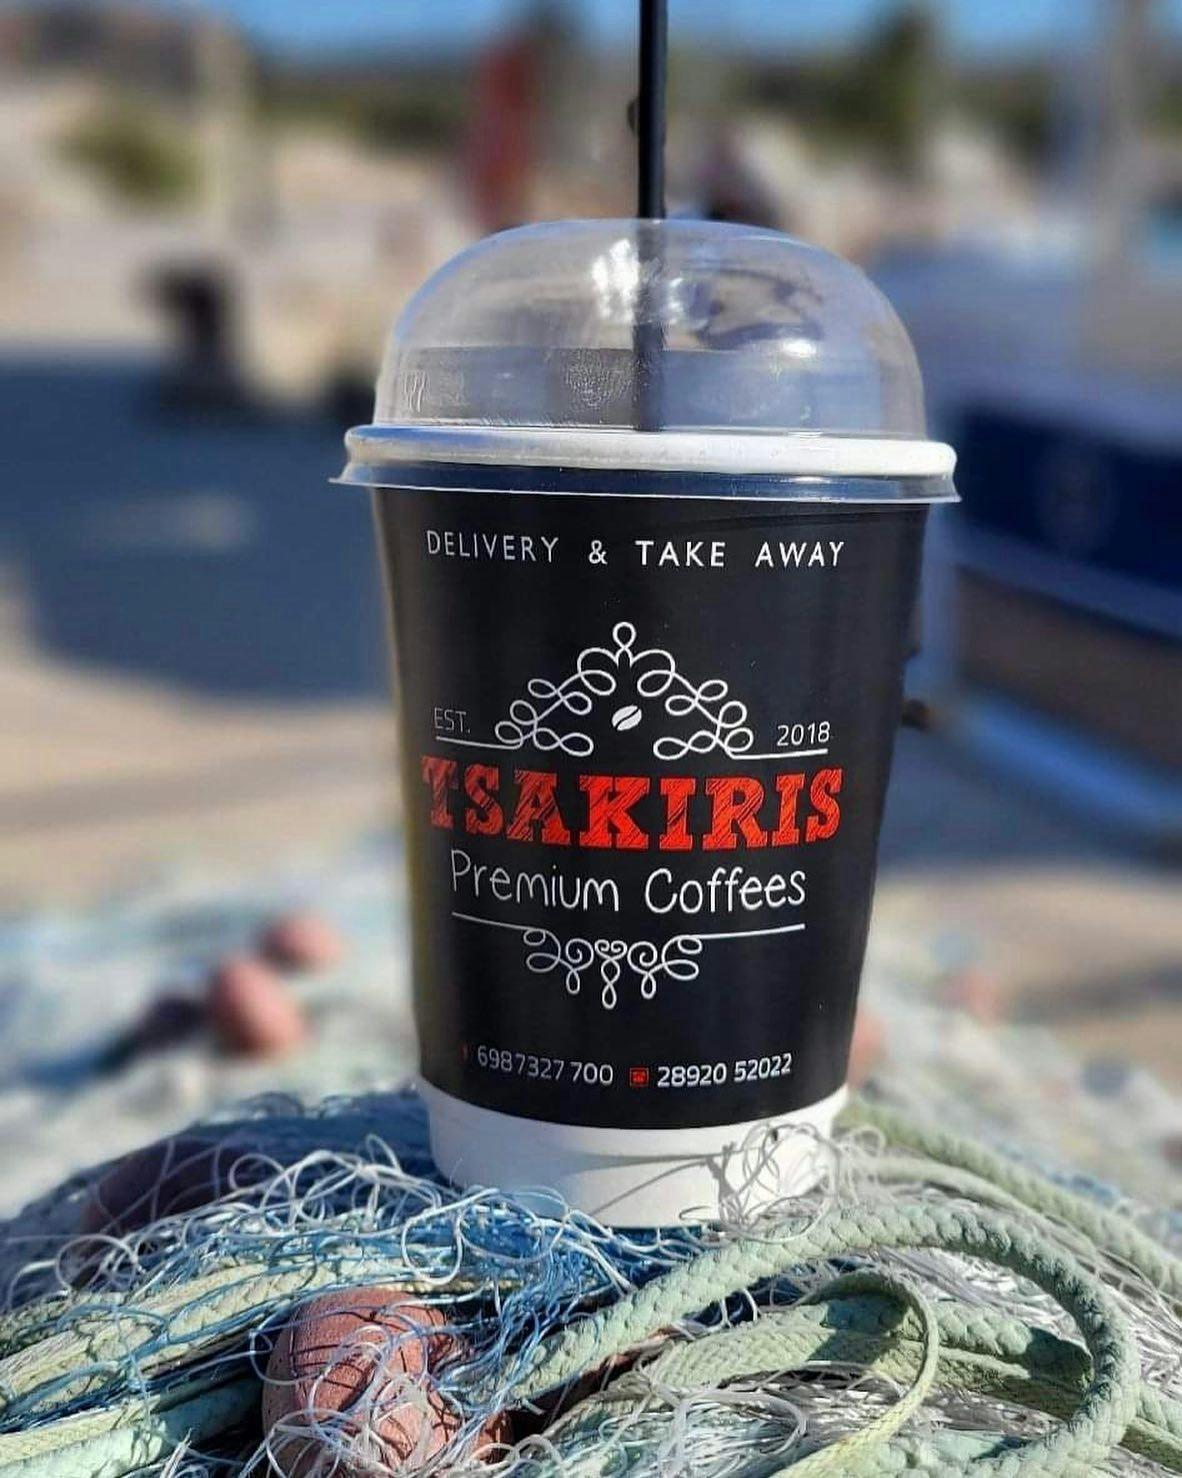 Tsakiris Premium Coffees